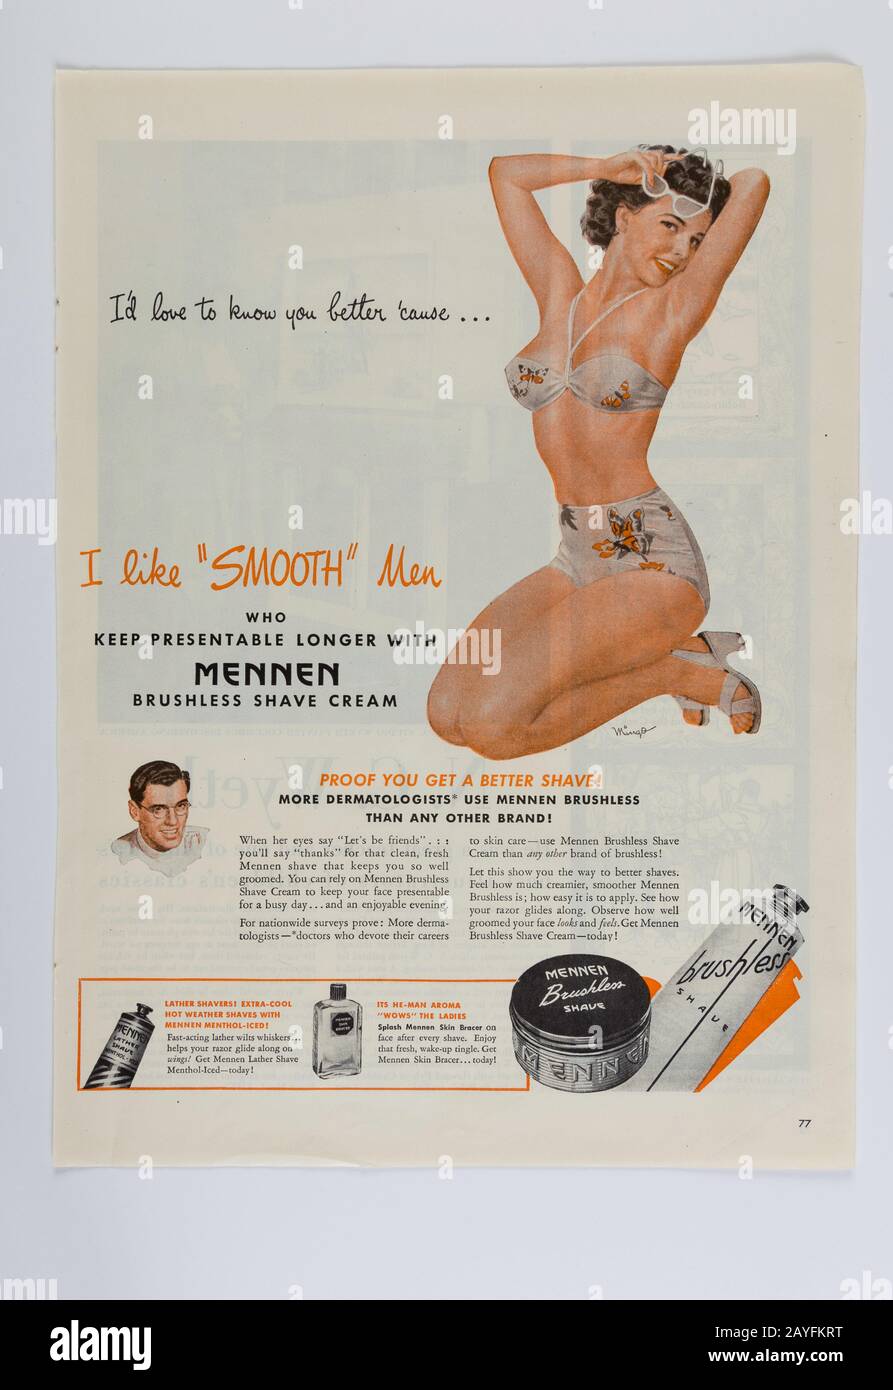 Lovable Bras, Vintage Print Ad